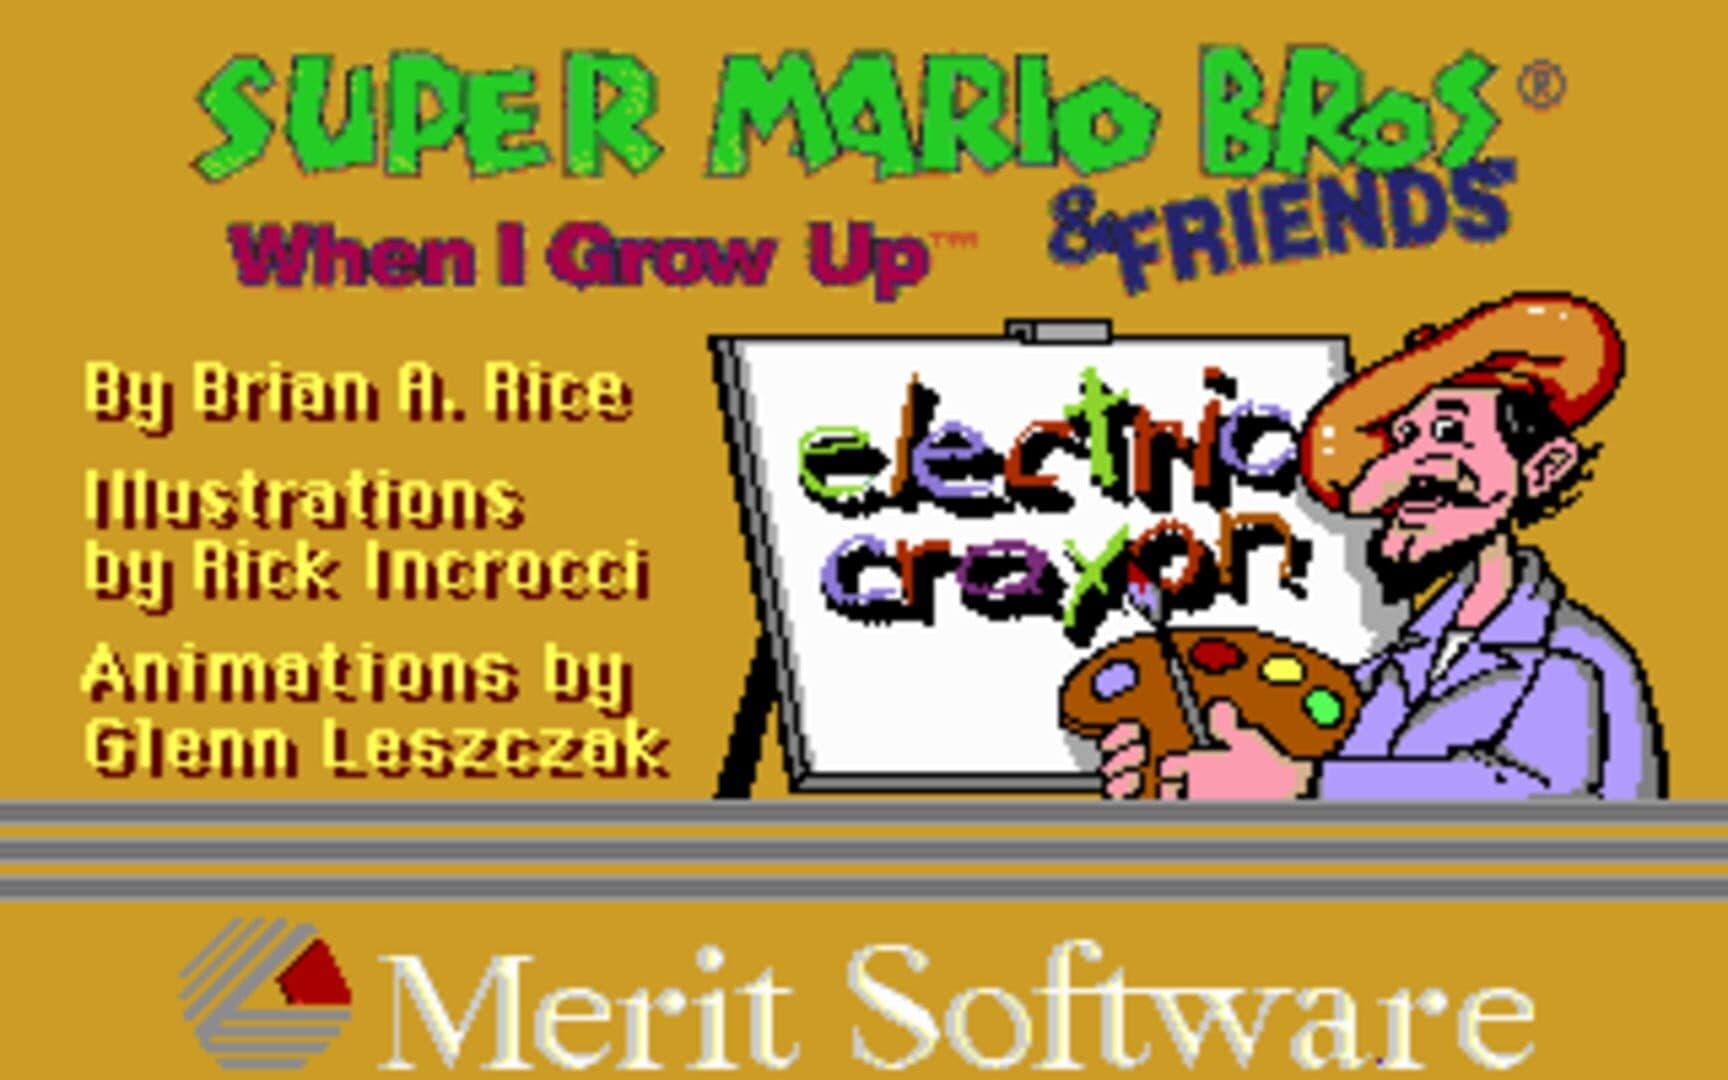 Super Mario Bros. & Friends: When I Grow Up Image